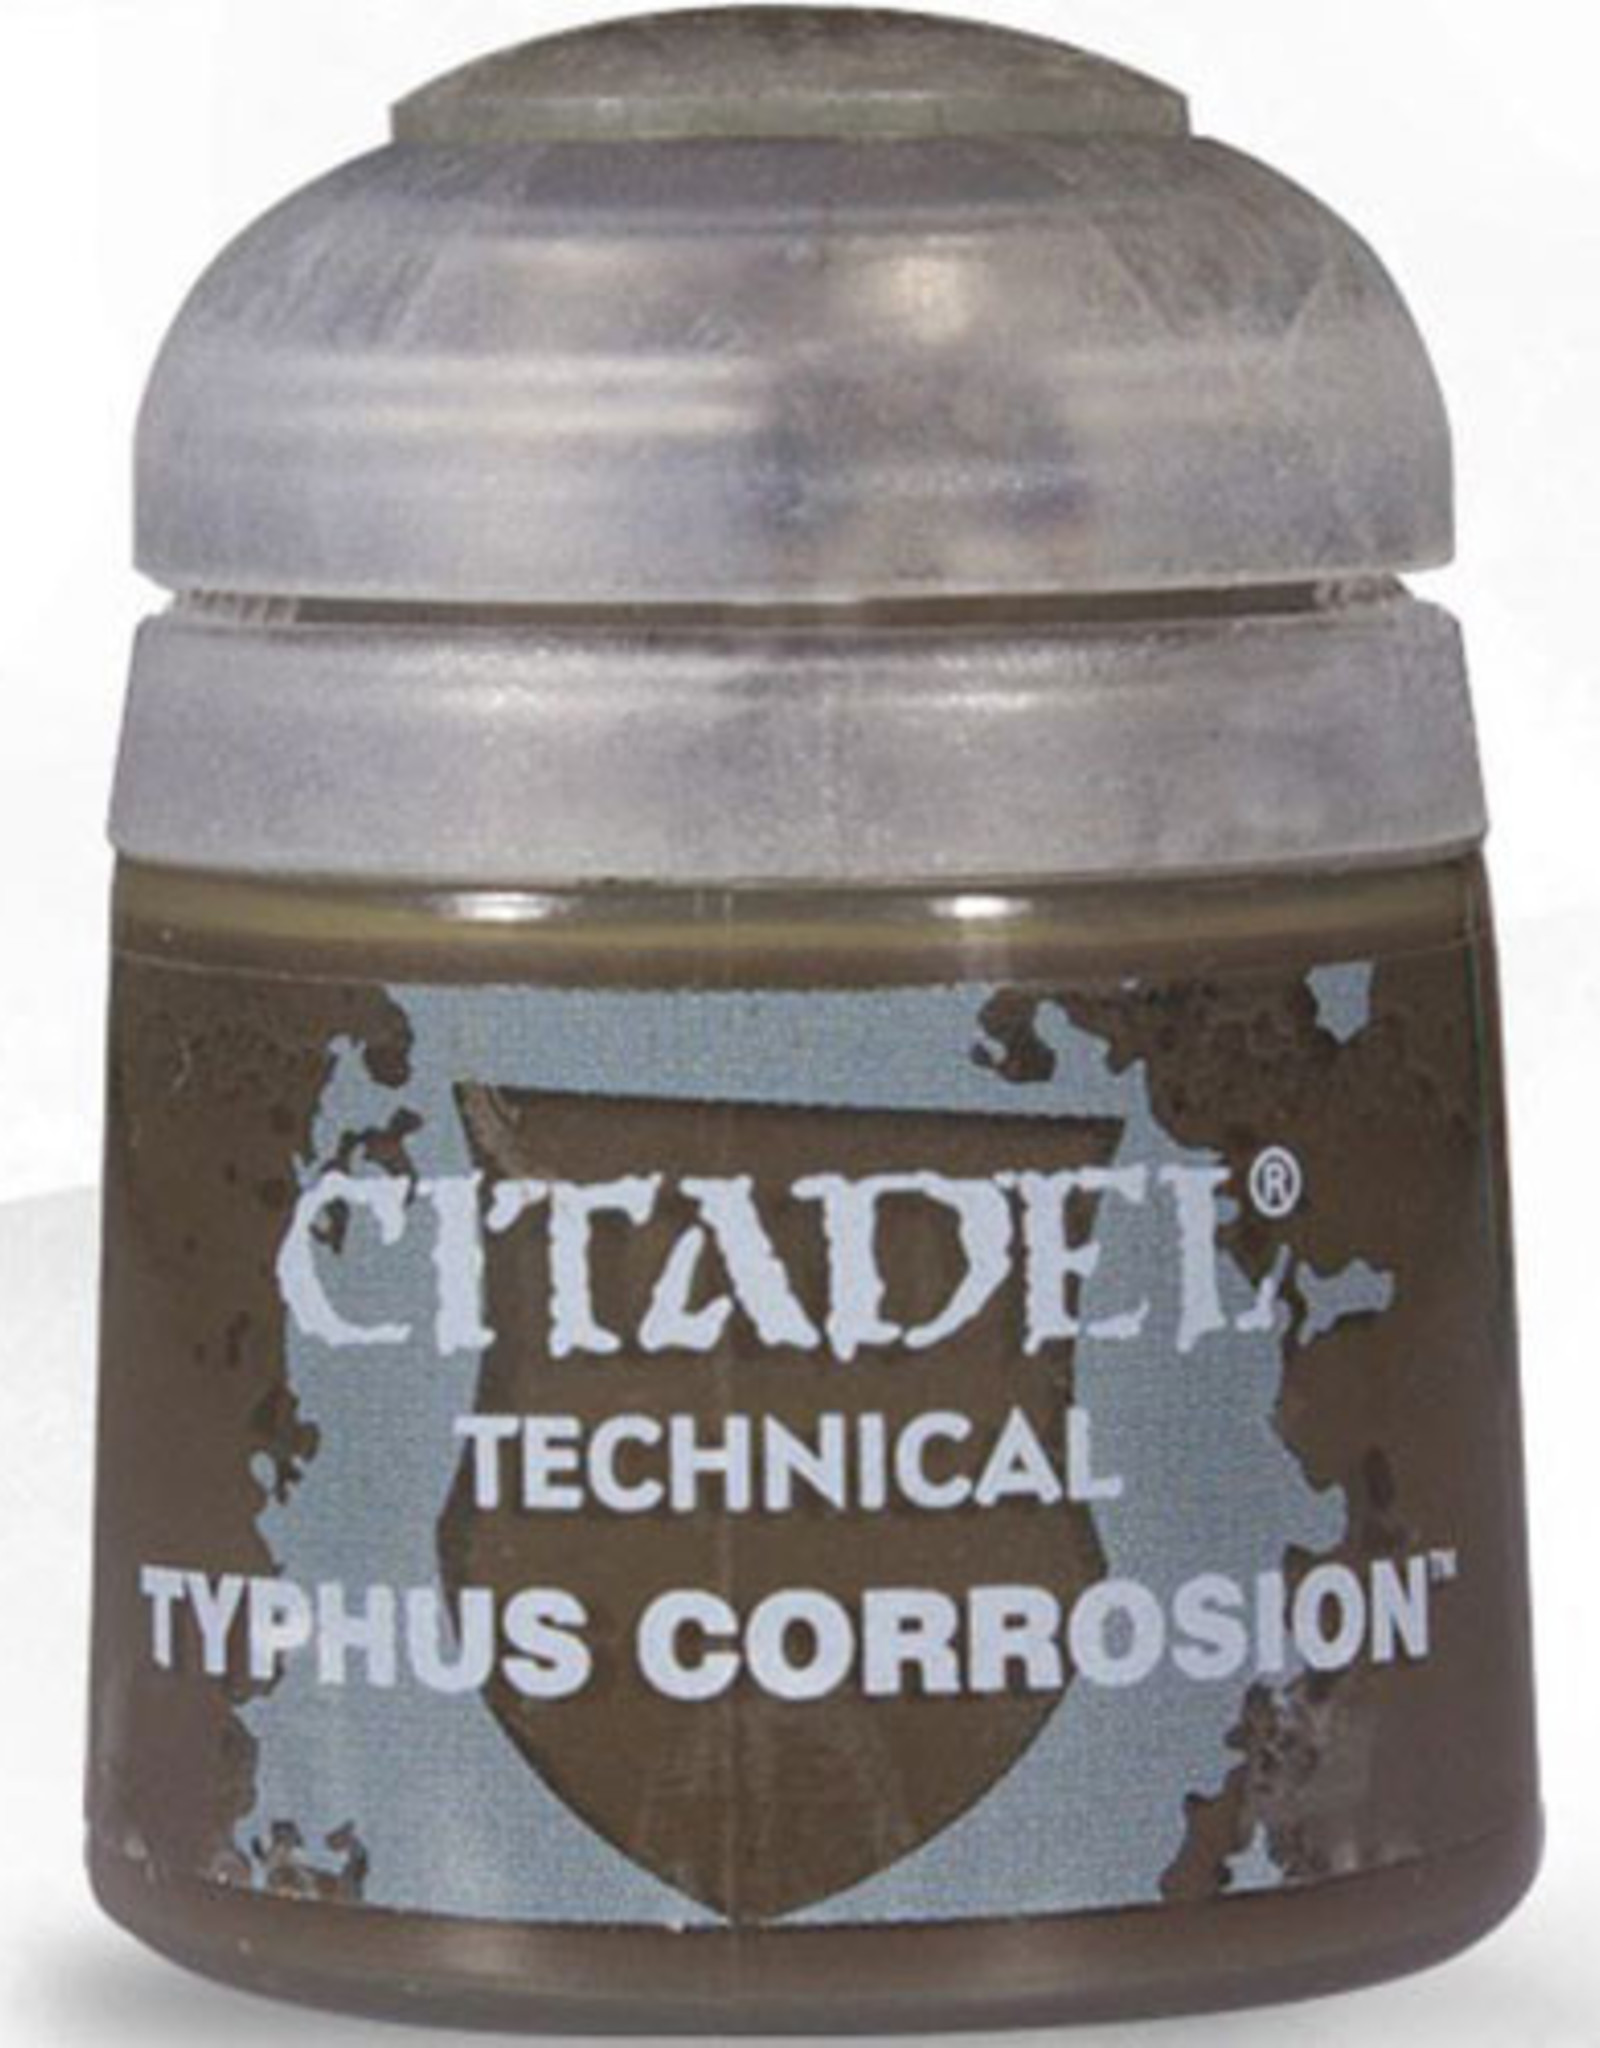 Games Workshop Citadel Technical: Typhus Corrosion